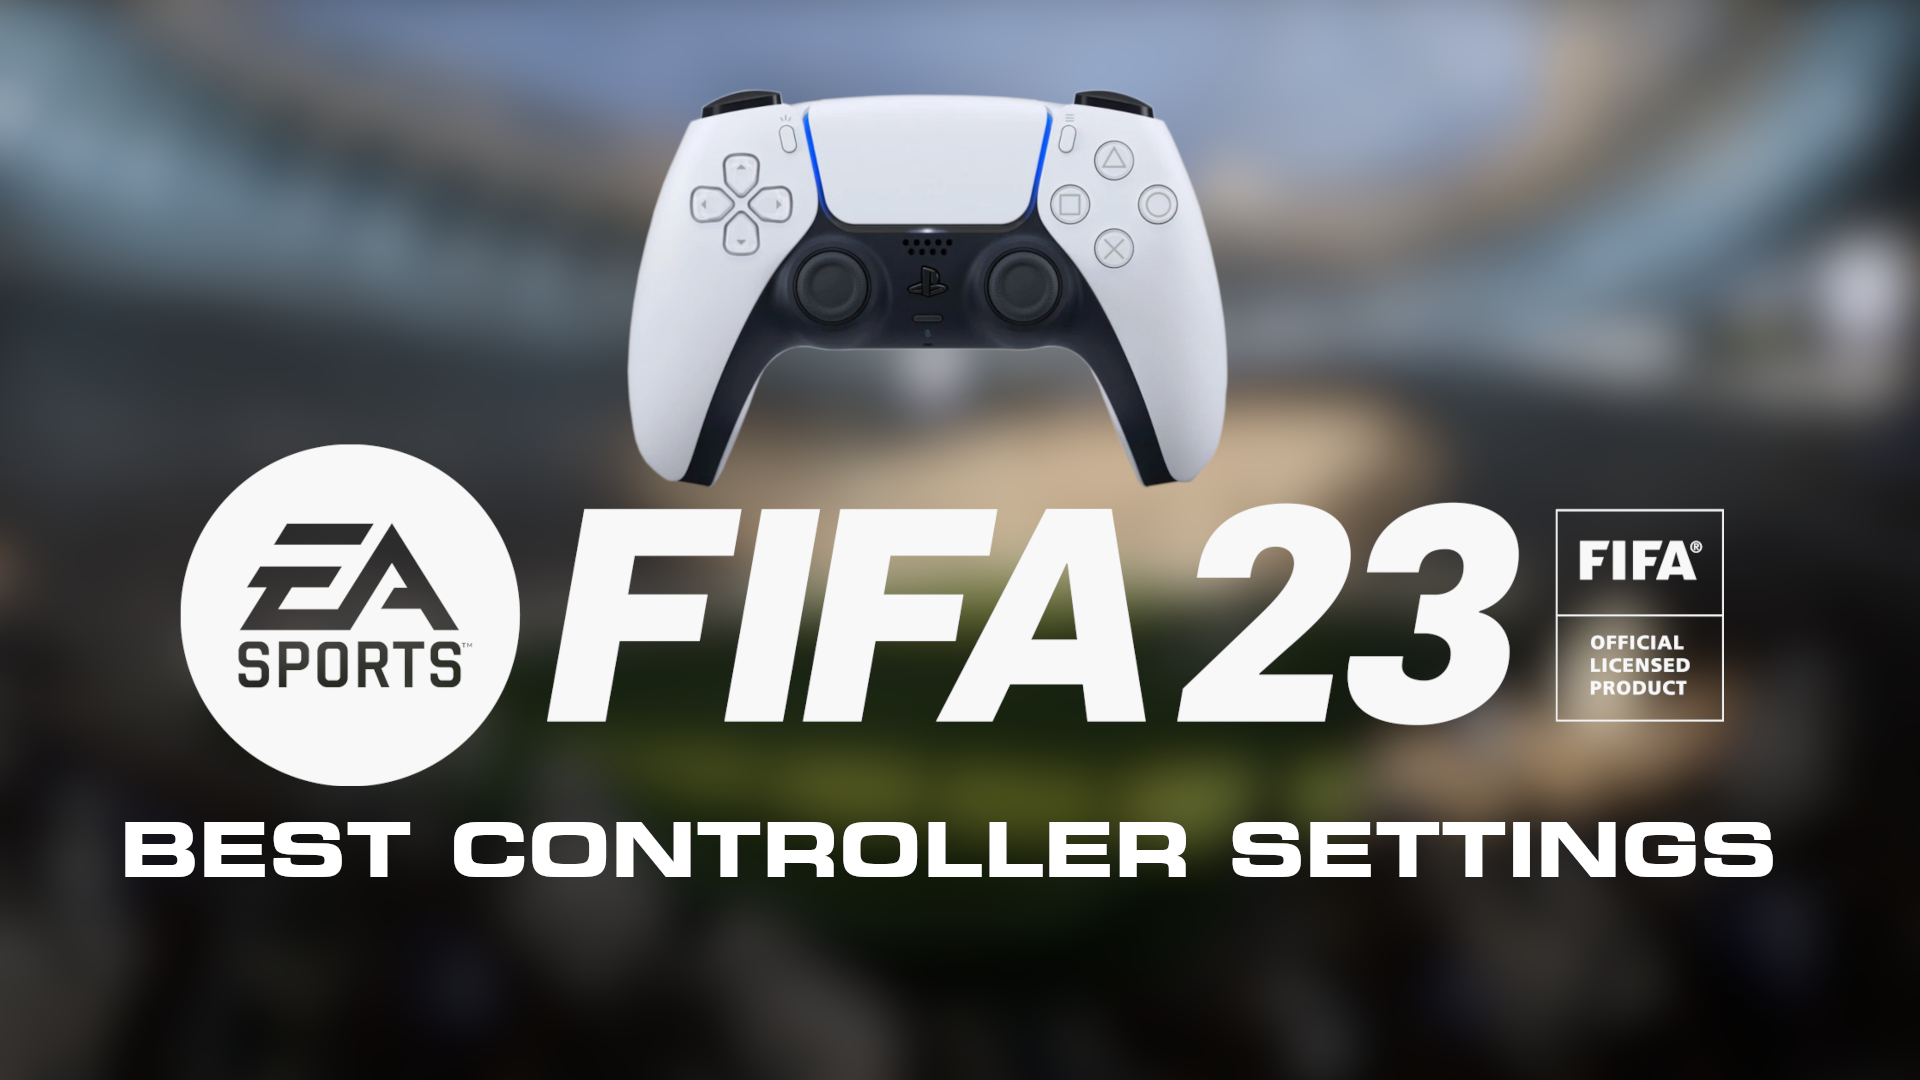 Fifa 23 X360ce Settings for Any Gamepad - NAIJSCHOOLS